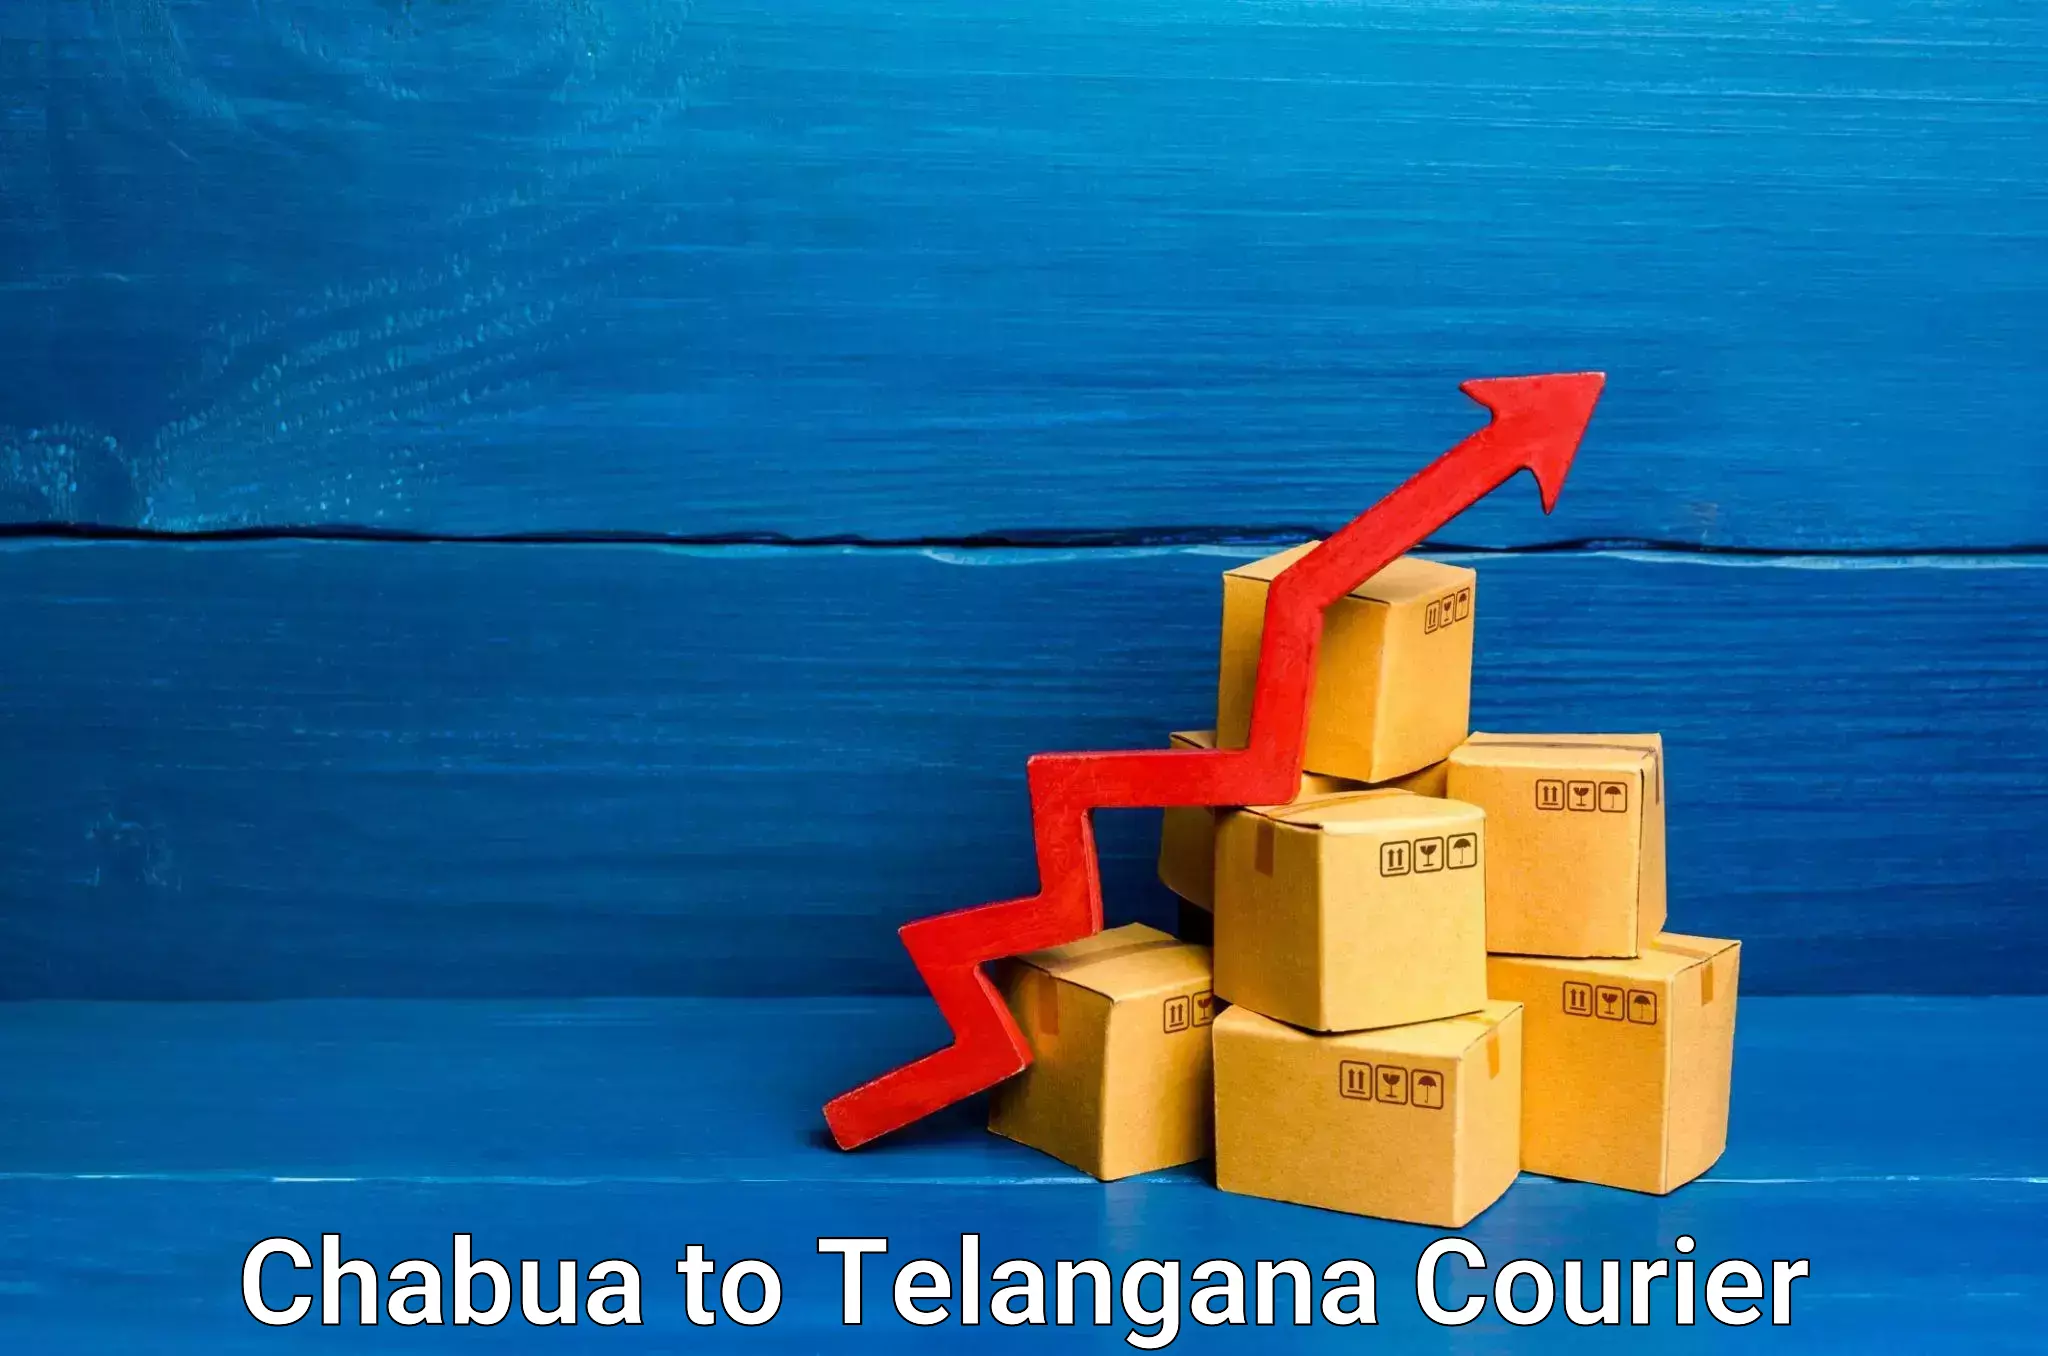 Tech-enabled shipping Chabua to Rudrangi